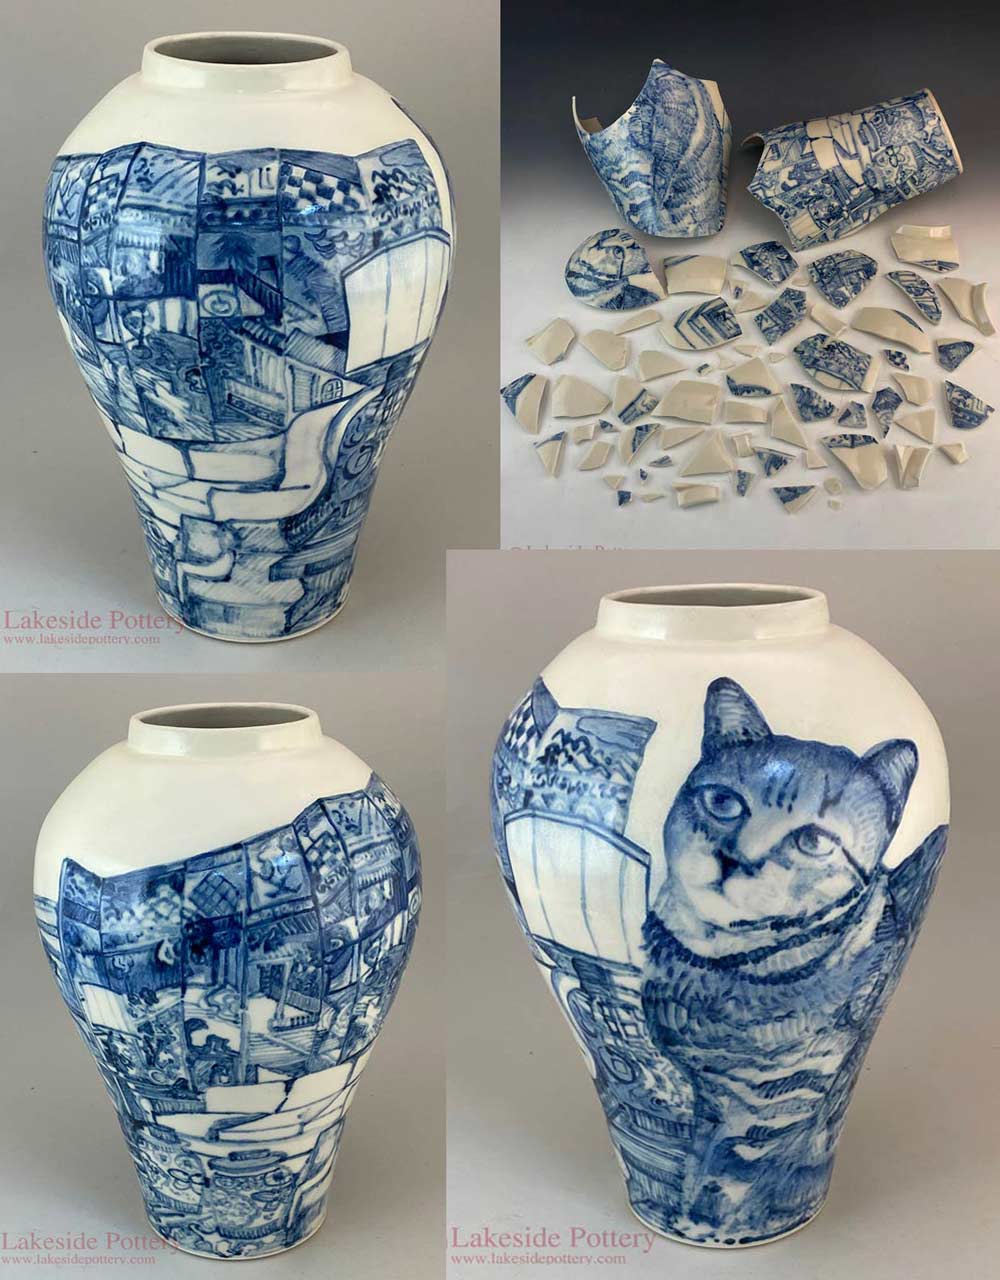 Suzanne Sloan Lewis's broken vase